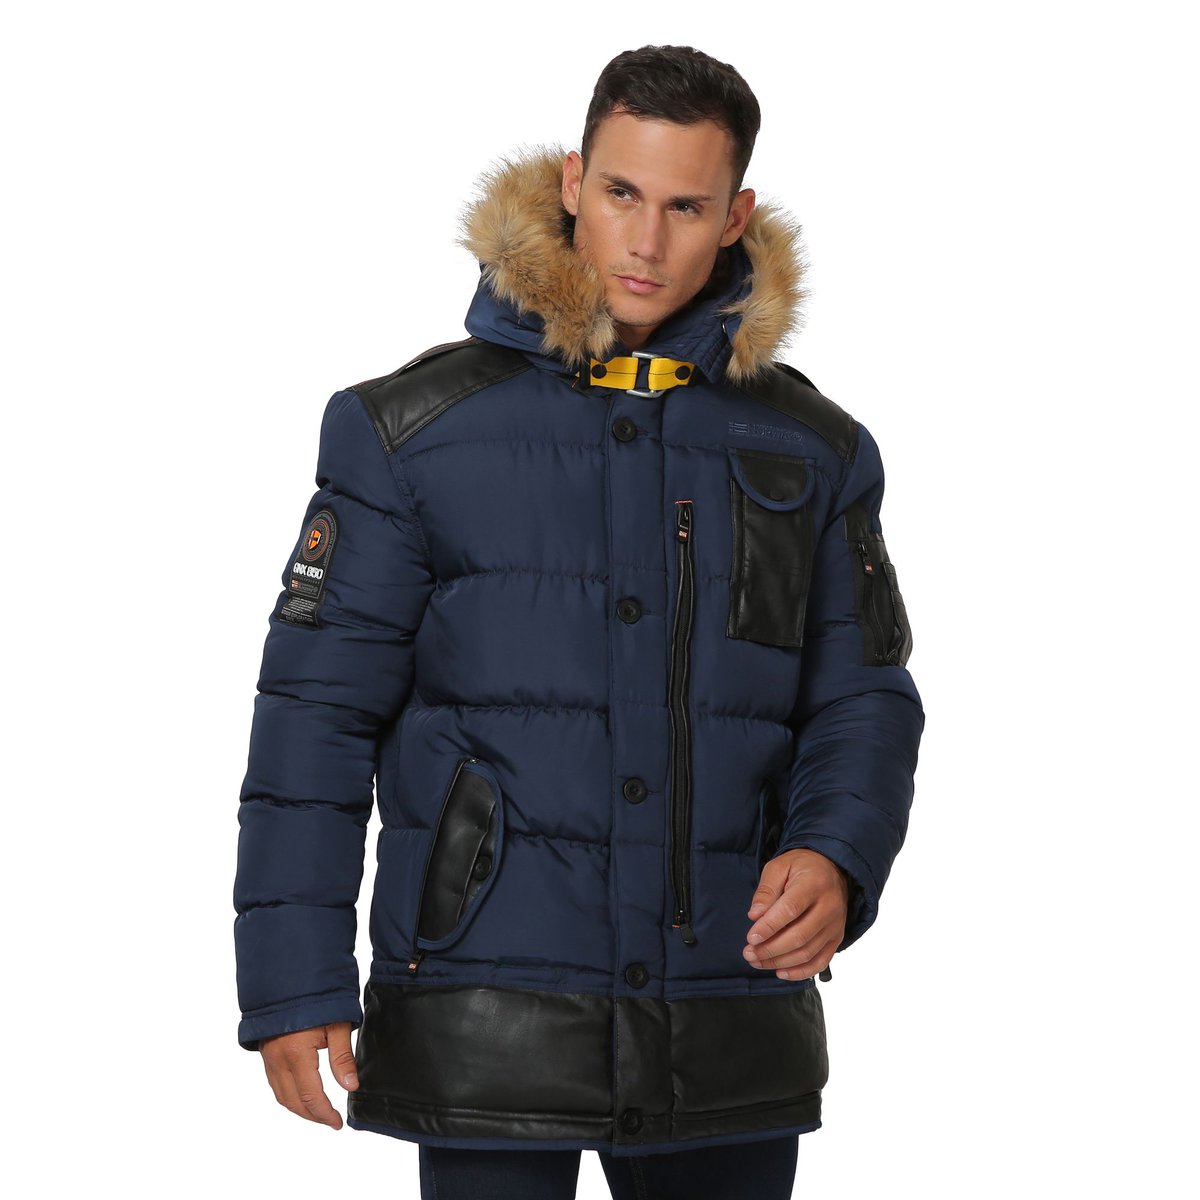 تويتر \ Privalia parte de Veepee على تويتر: "¡Las chaquetas Geographical son son este invierno! Podéis encontrar la vuestra en Privalia ▷ https://t.co/8cHFtOqmC9